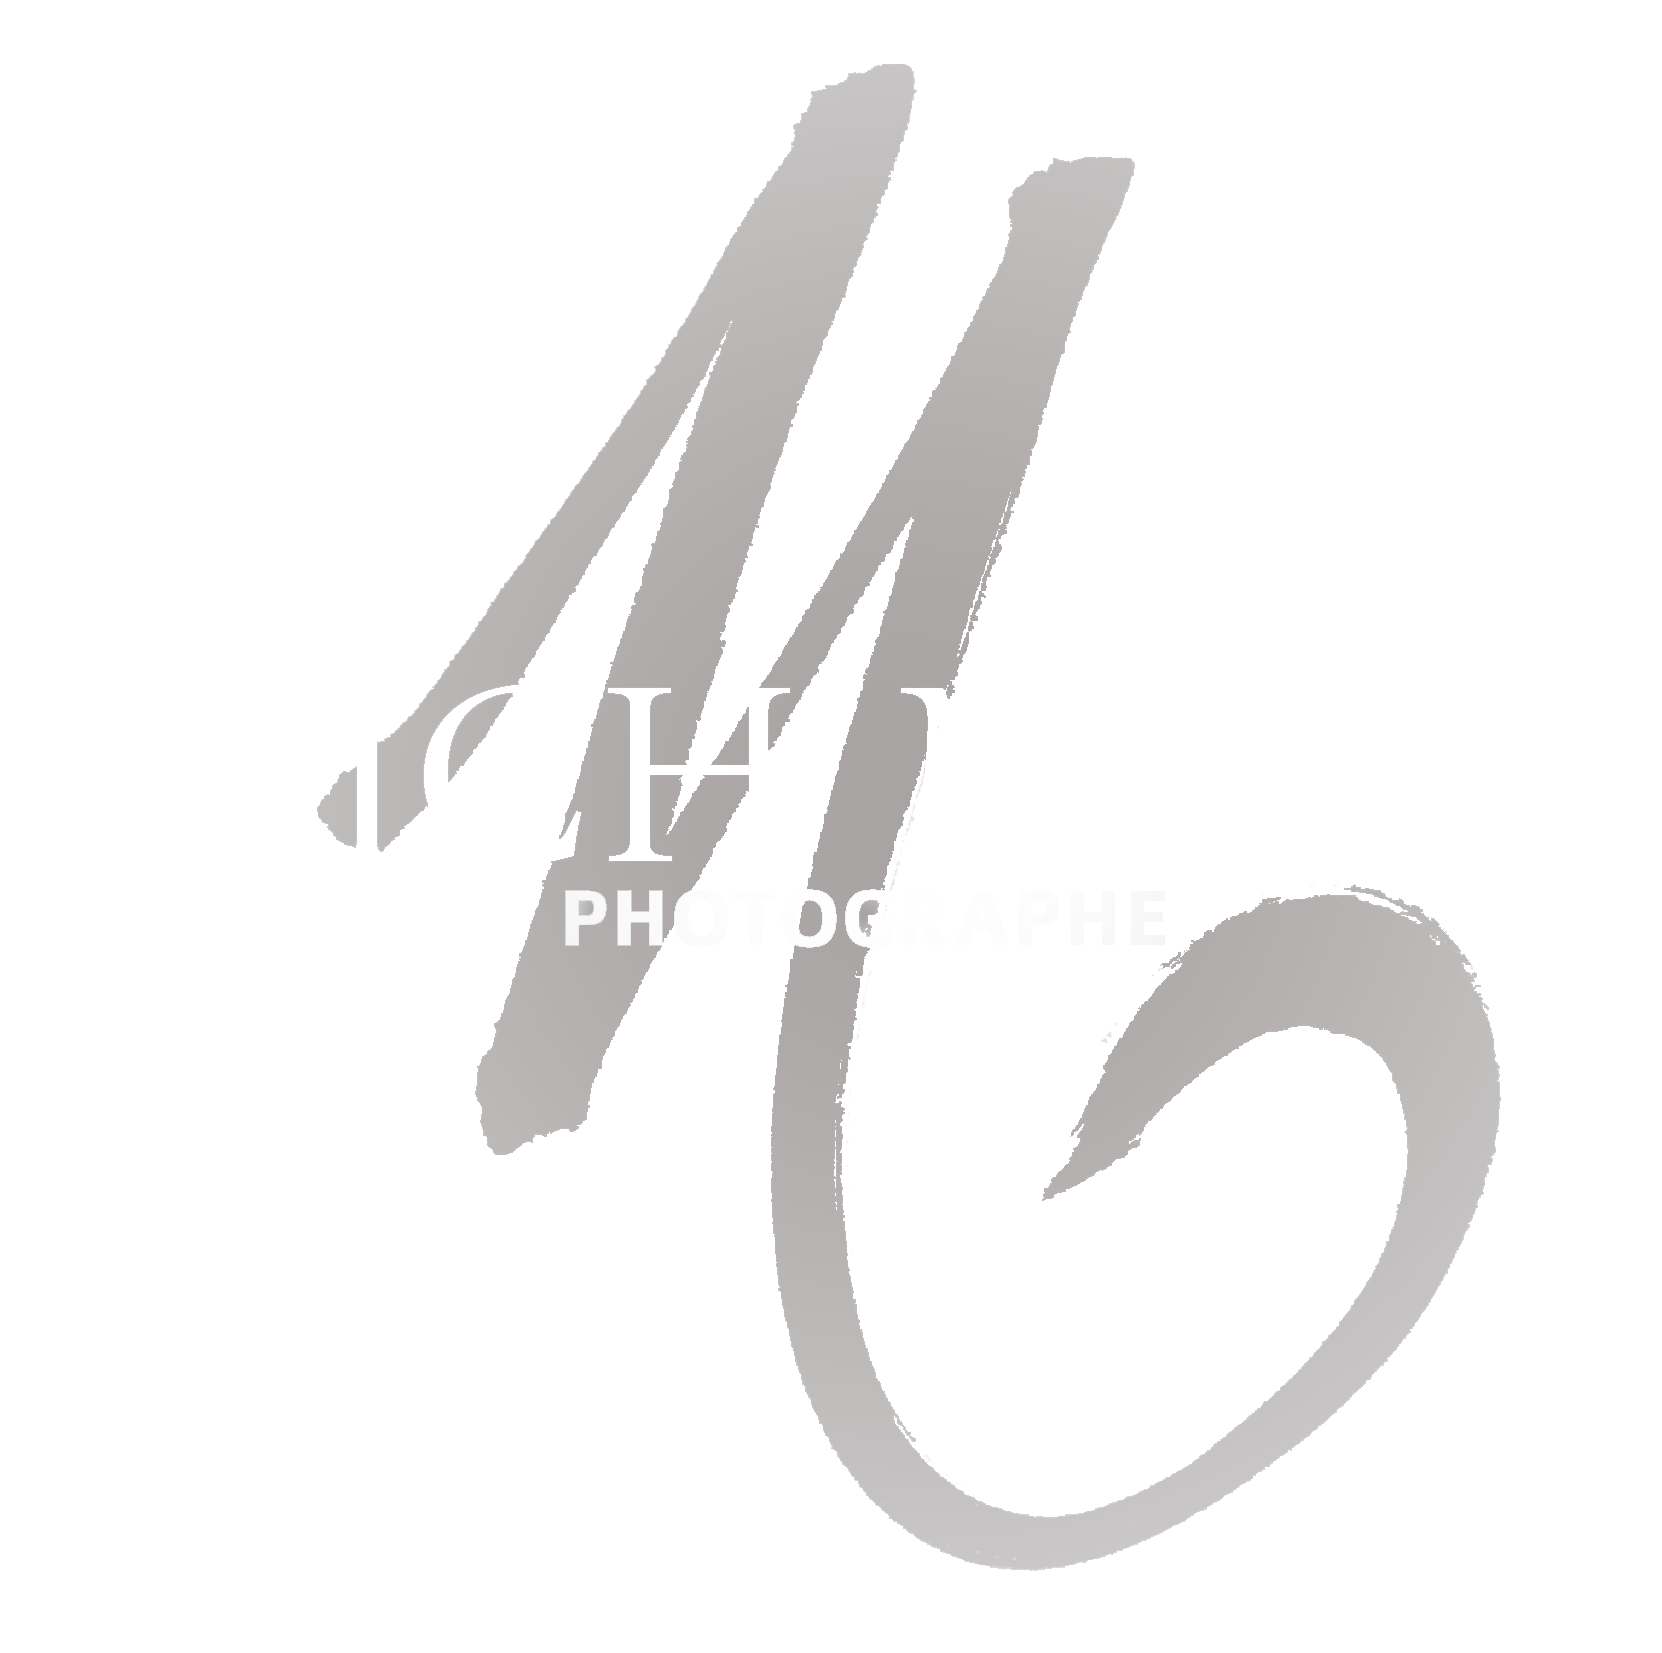 MichMich photographe